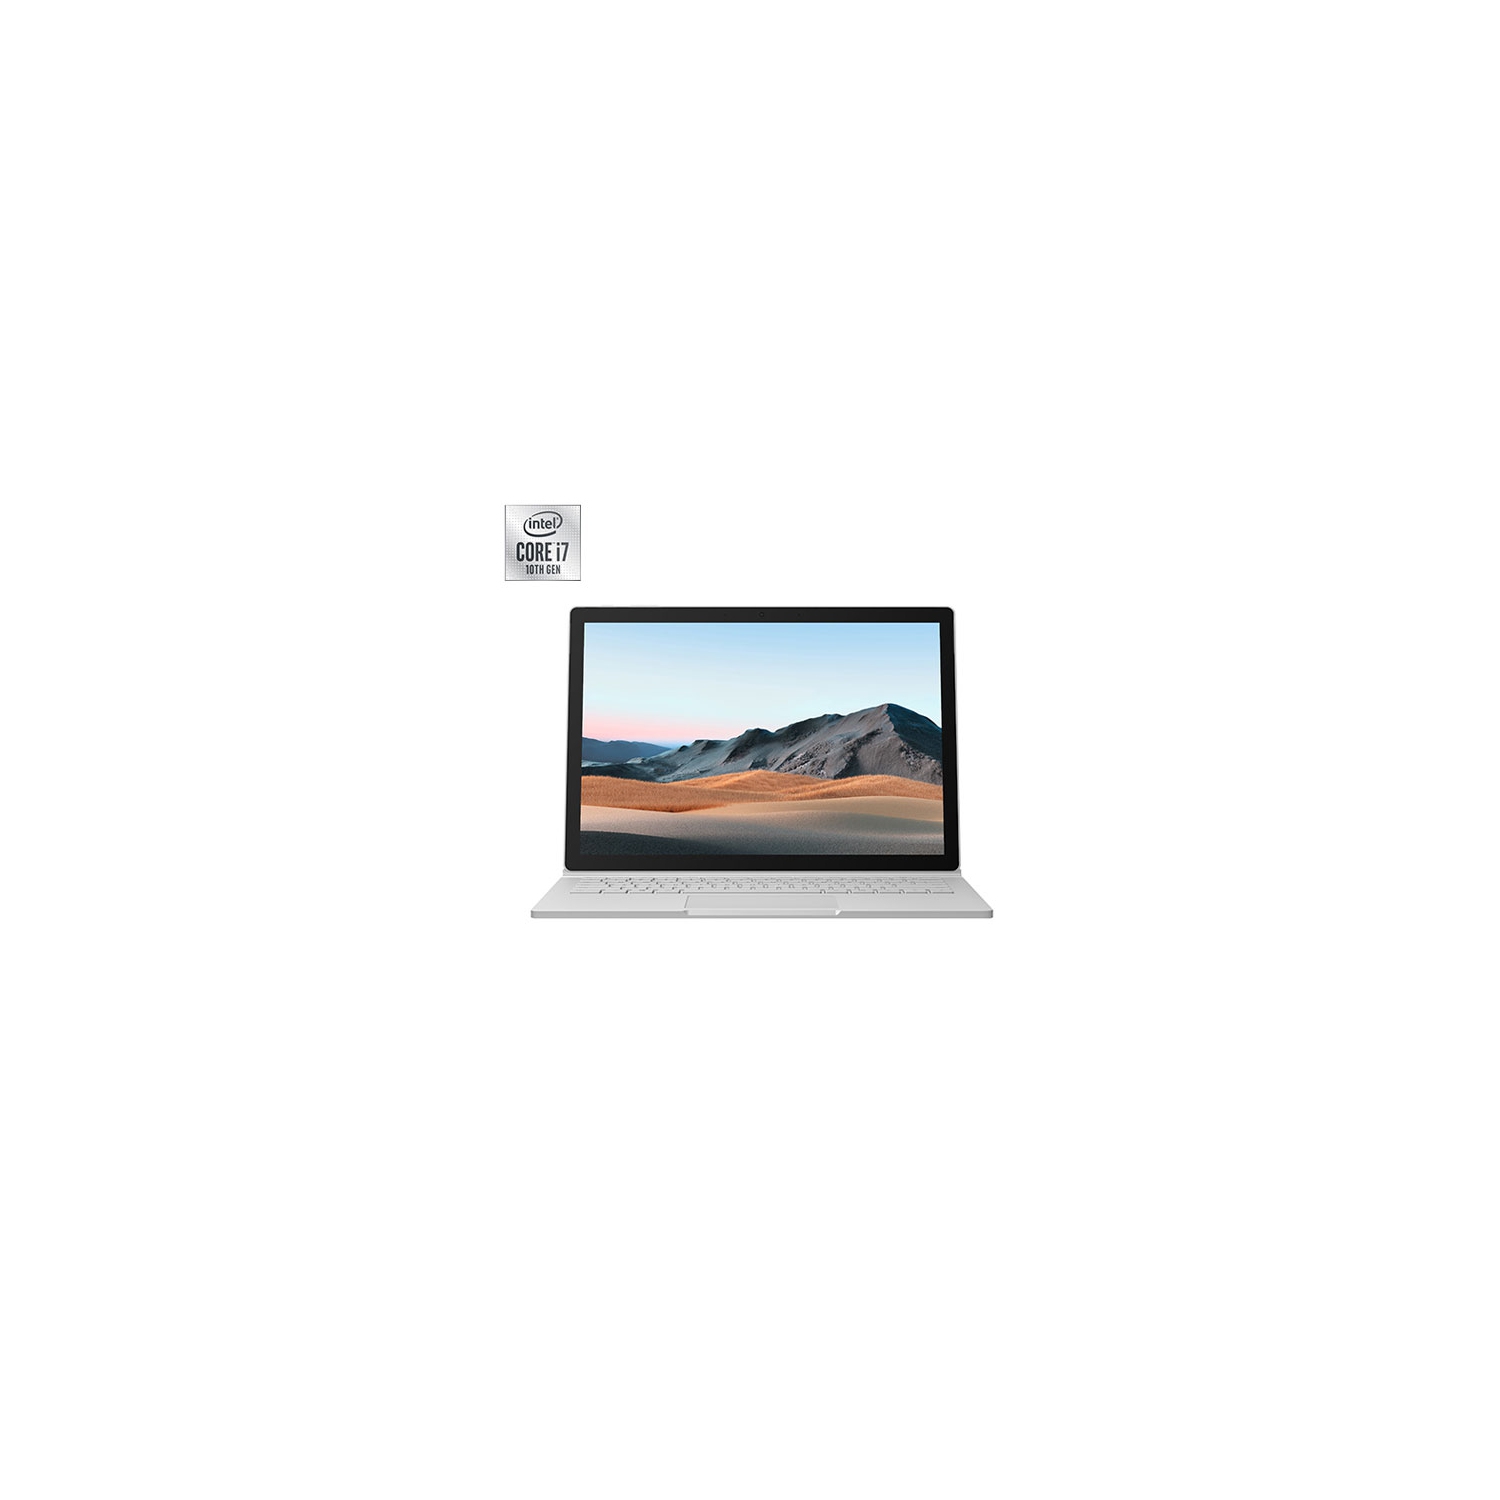 Open Box - Microsoft Surface Book 3 13.5" 2-in-1 Laptop - Platinum (Intel Ci7-1065G7/512GB SSD/32GB RAM) - English